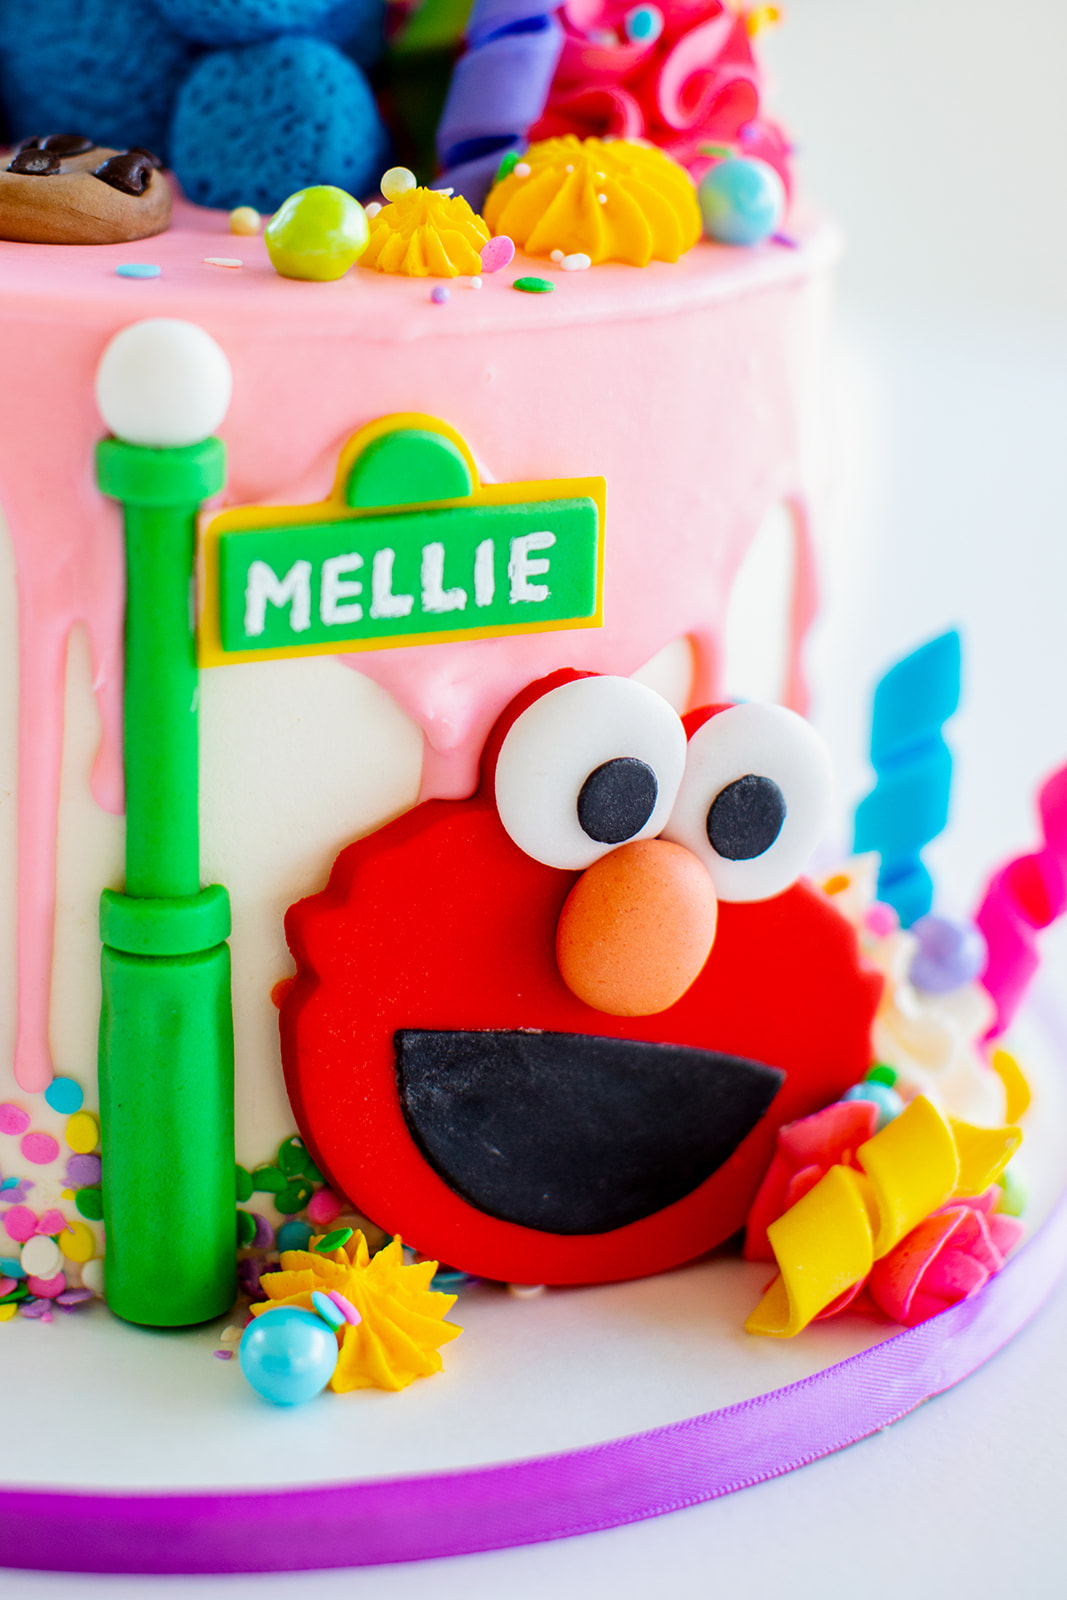 Mellies Sesame Street Second Birthday Celebration - Image Property of www.j-dphoto.com